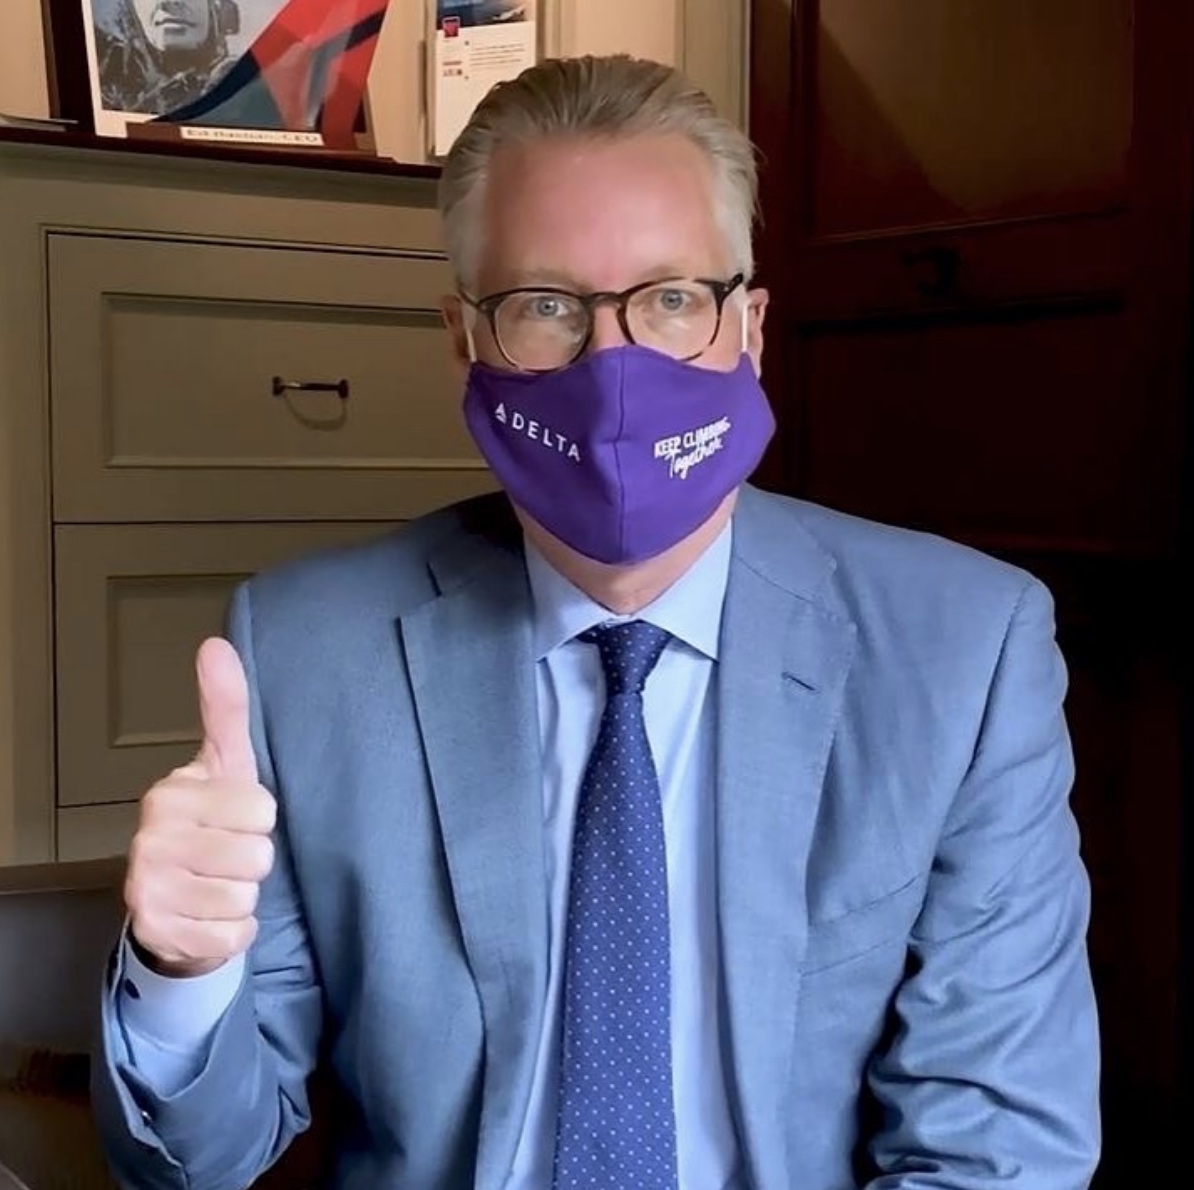 a man wearing a purple face mask